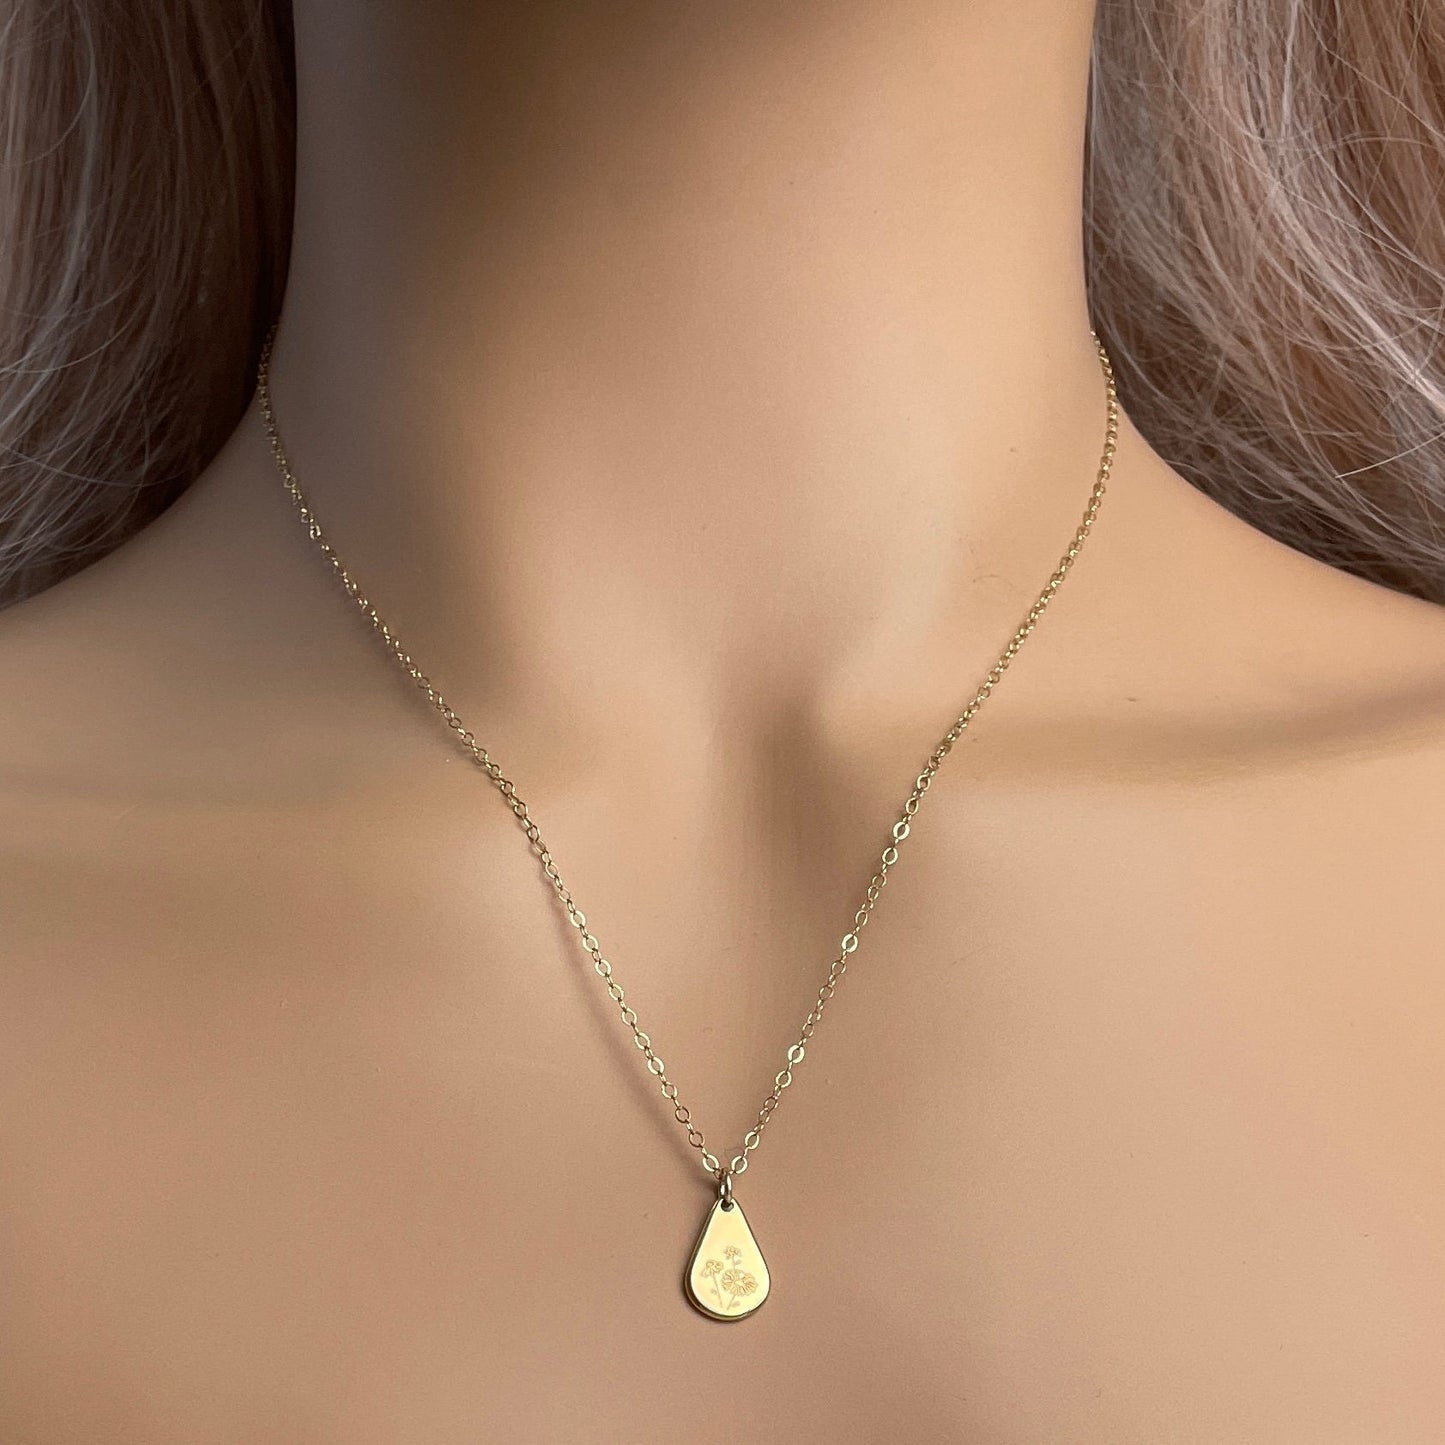 Custom Birth Flower Necklace Gold, Teardrop Birth Flower Charm Necklace, Minimalist Layer, Gift For Best Friend, M6-723